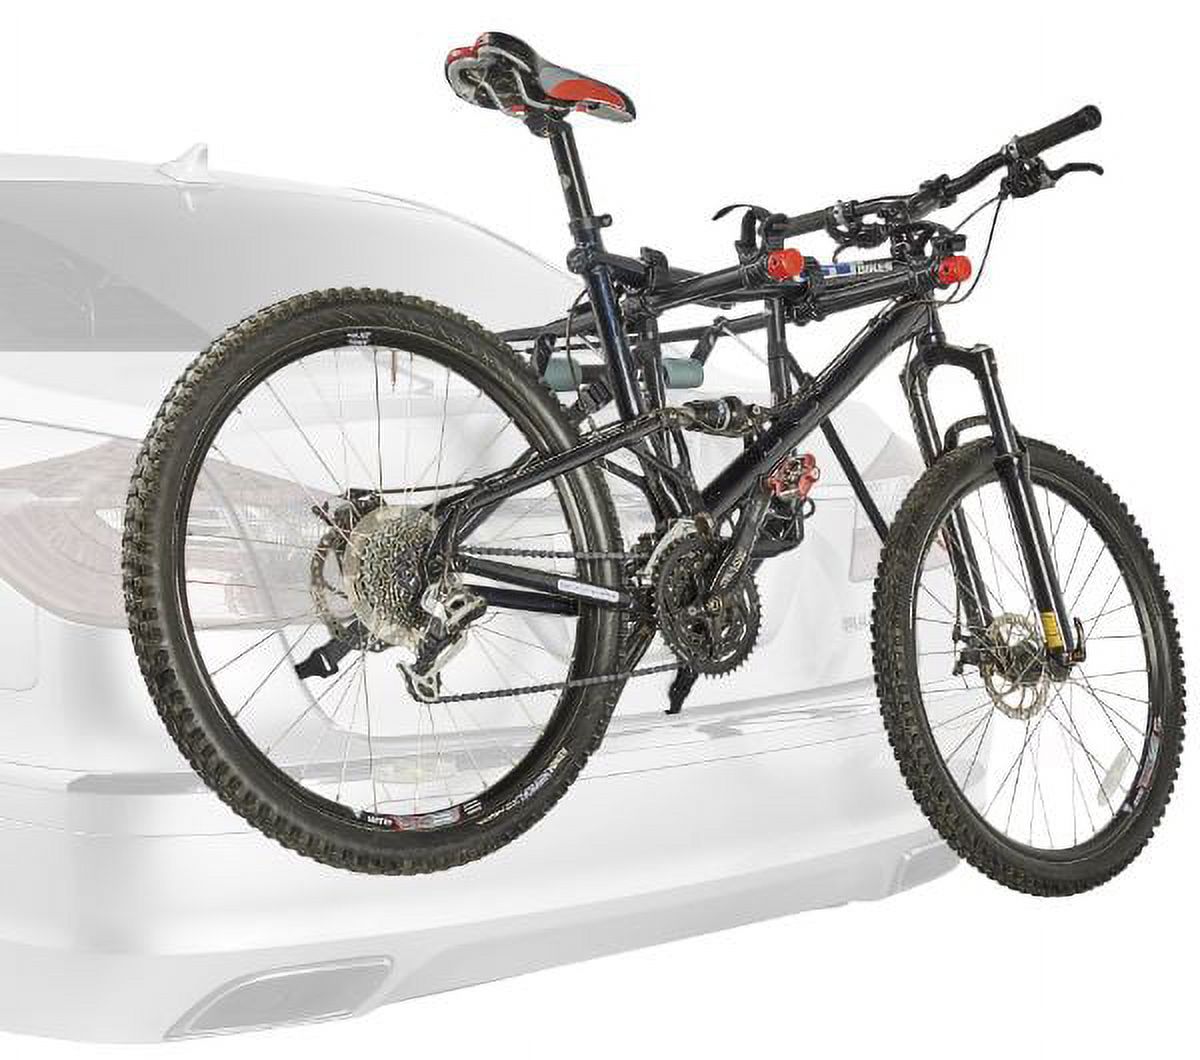 Allen Sports Deluxe 2-Bike Trunk Mount Bike Rack, model 102DN, 35 lbs per bike capacity - image 3 of 11